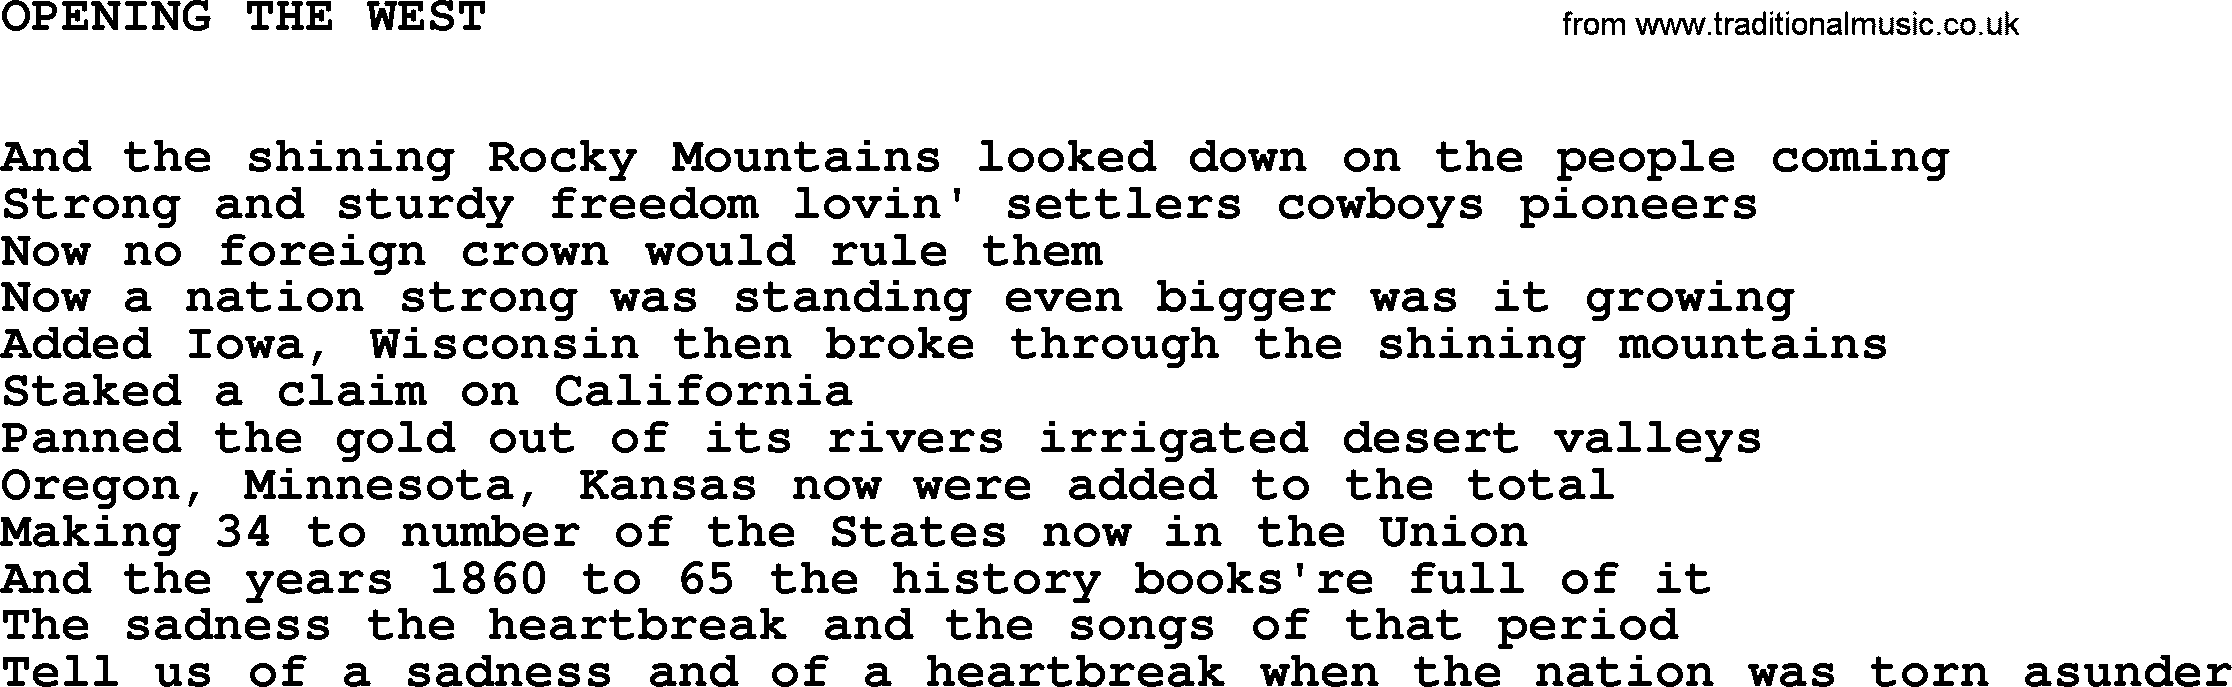 Johnny Cash song Opening The West.txt lyrics